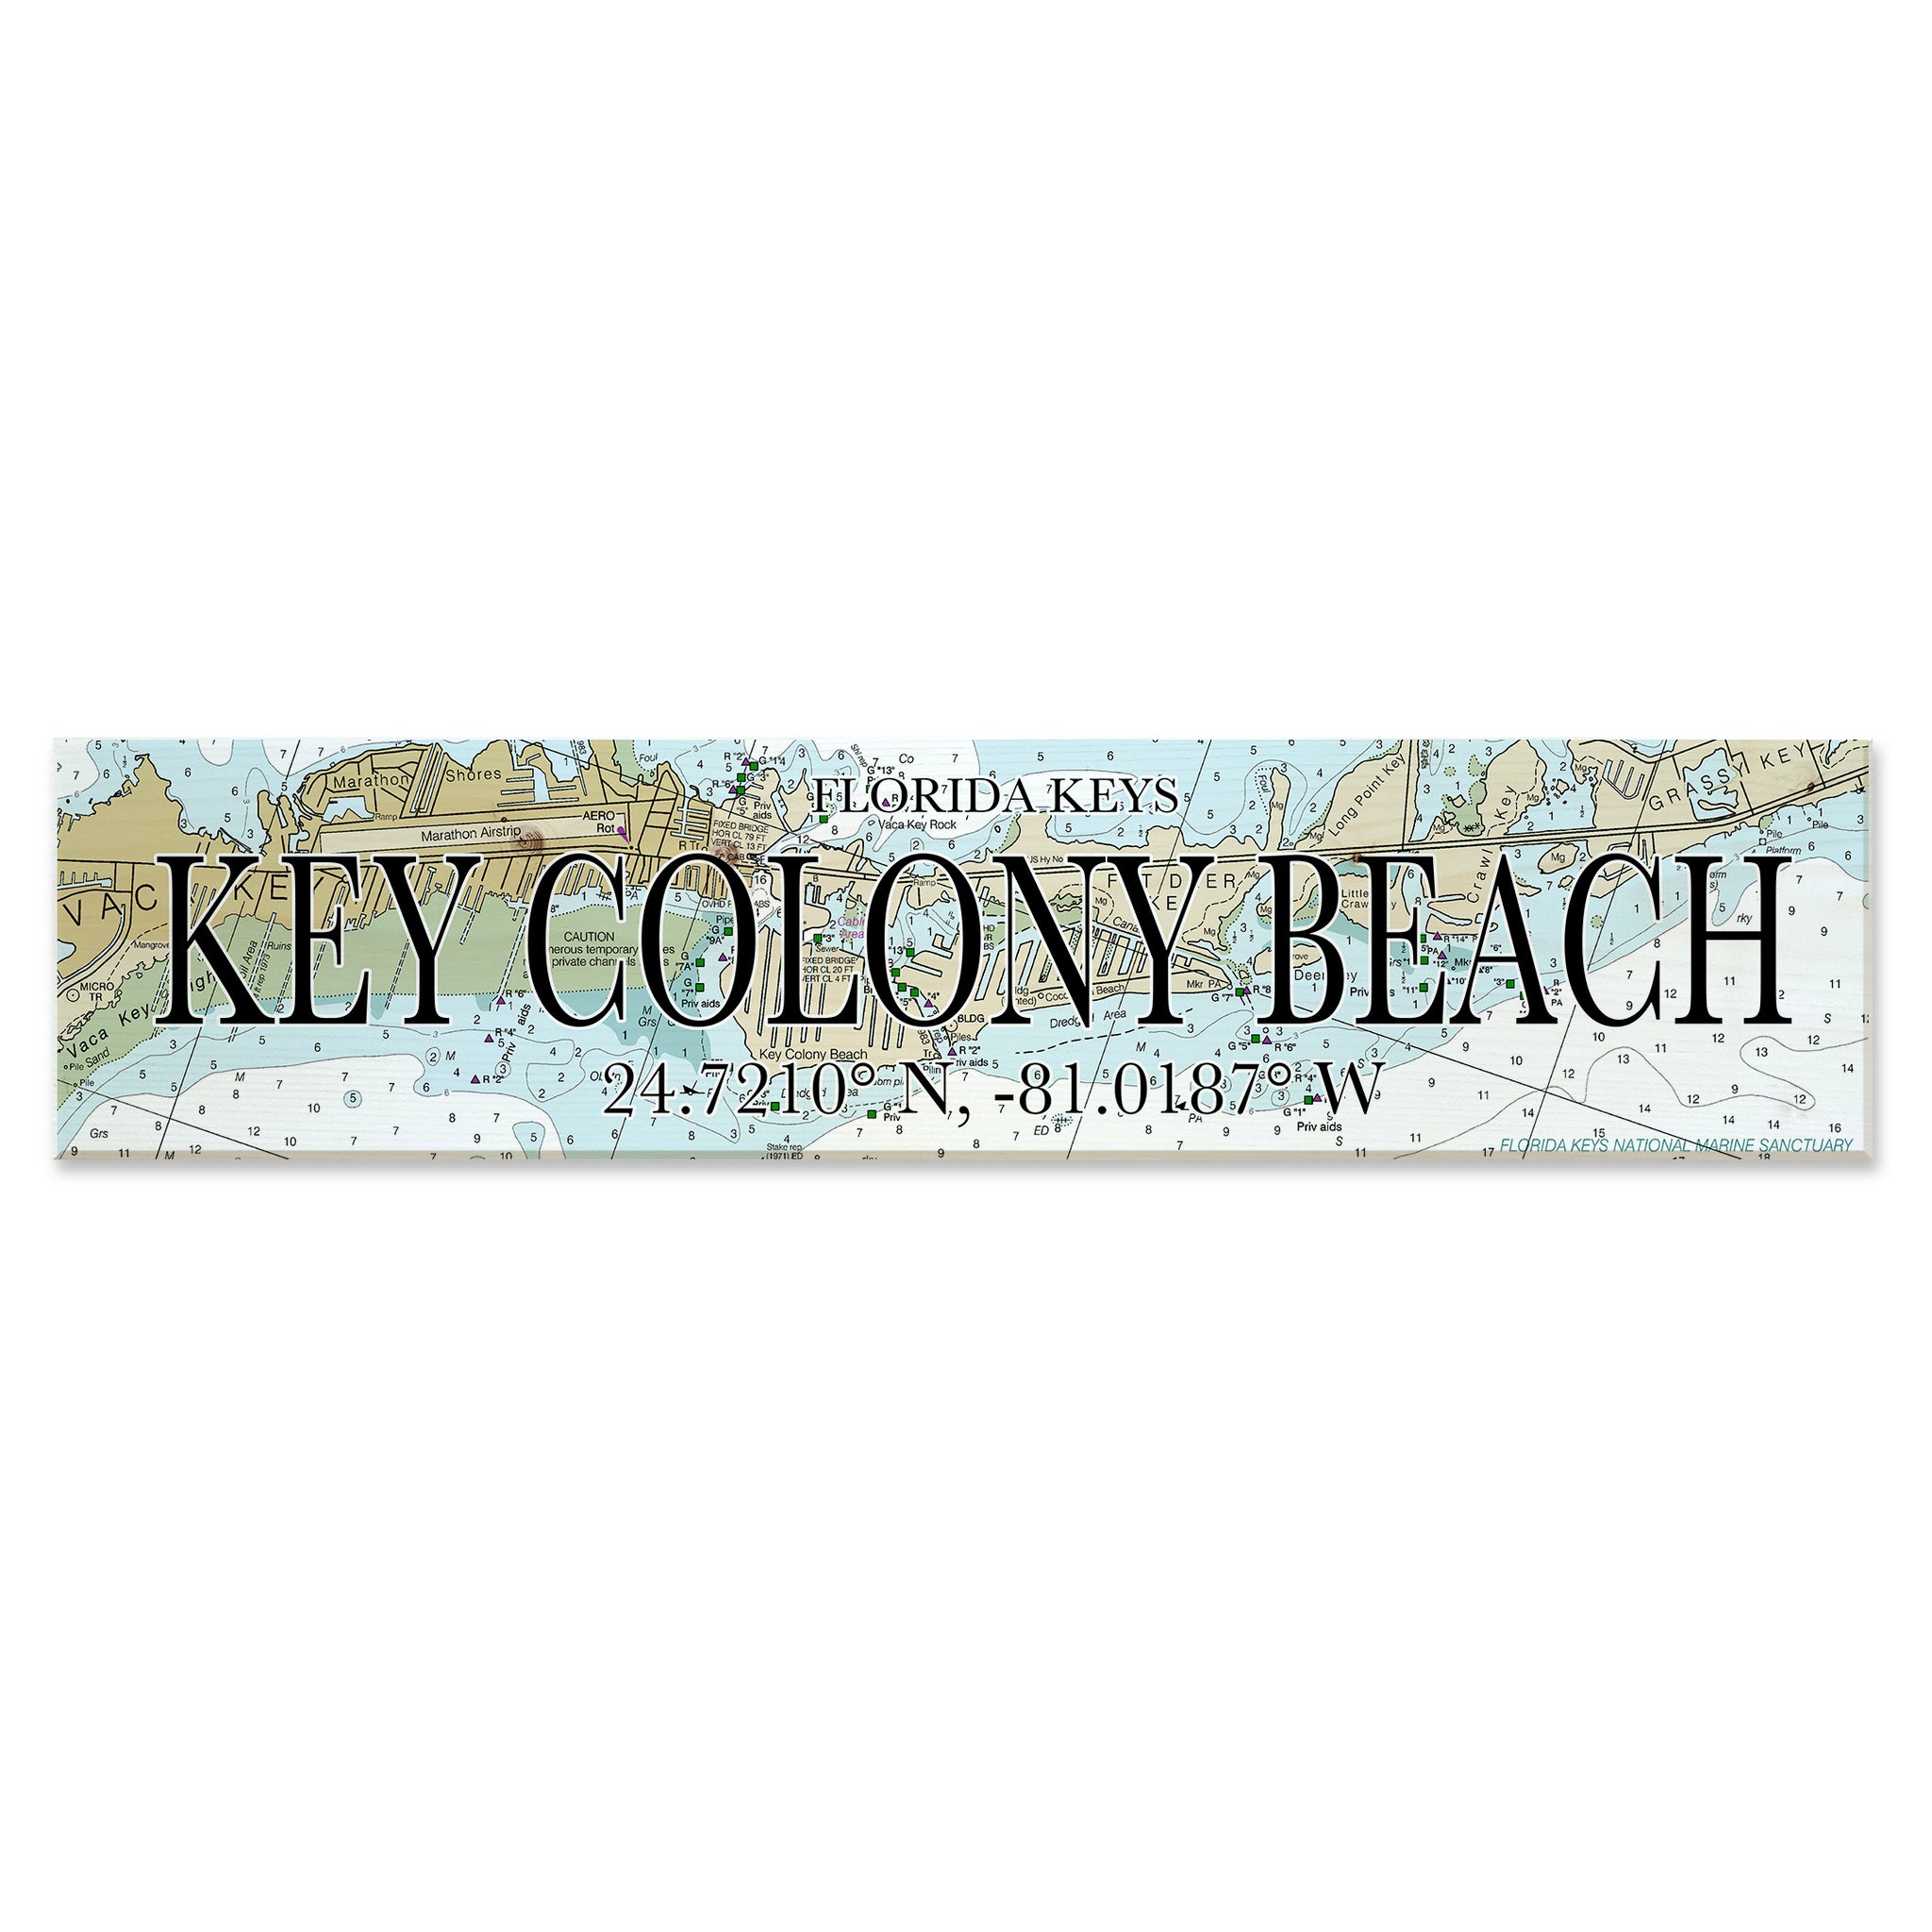 Key Colony Beach, FL Coordinate Sign